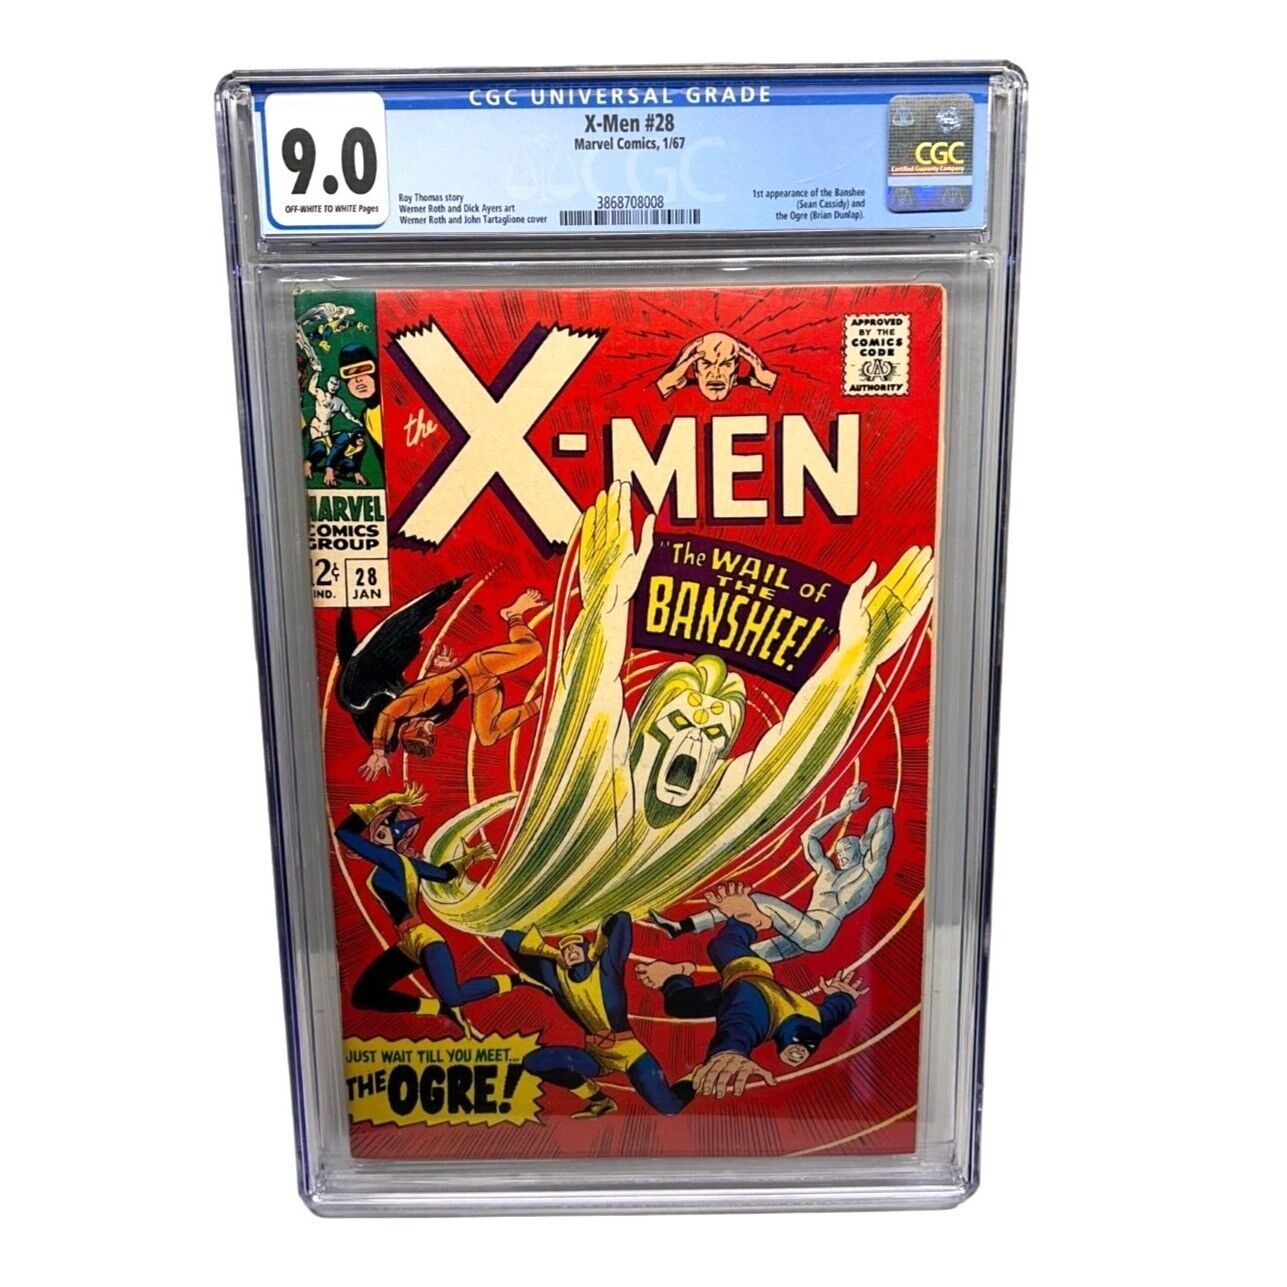 X-Men #28 (1967) CGC Graded 9.0 NICE Marvel 1st Appearance of Banshee and Ogre